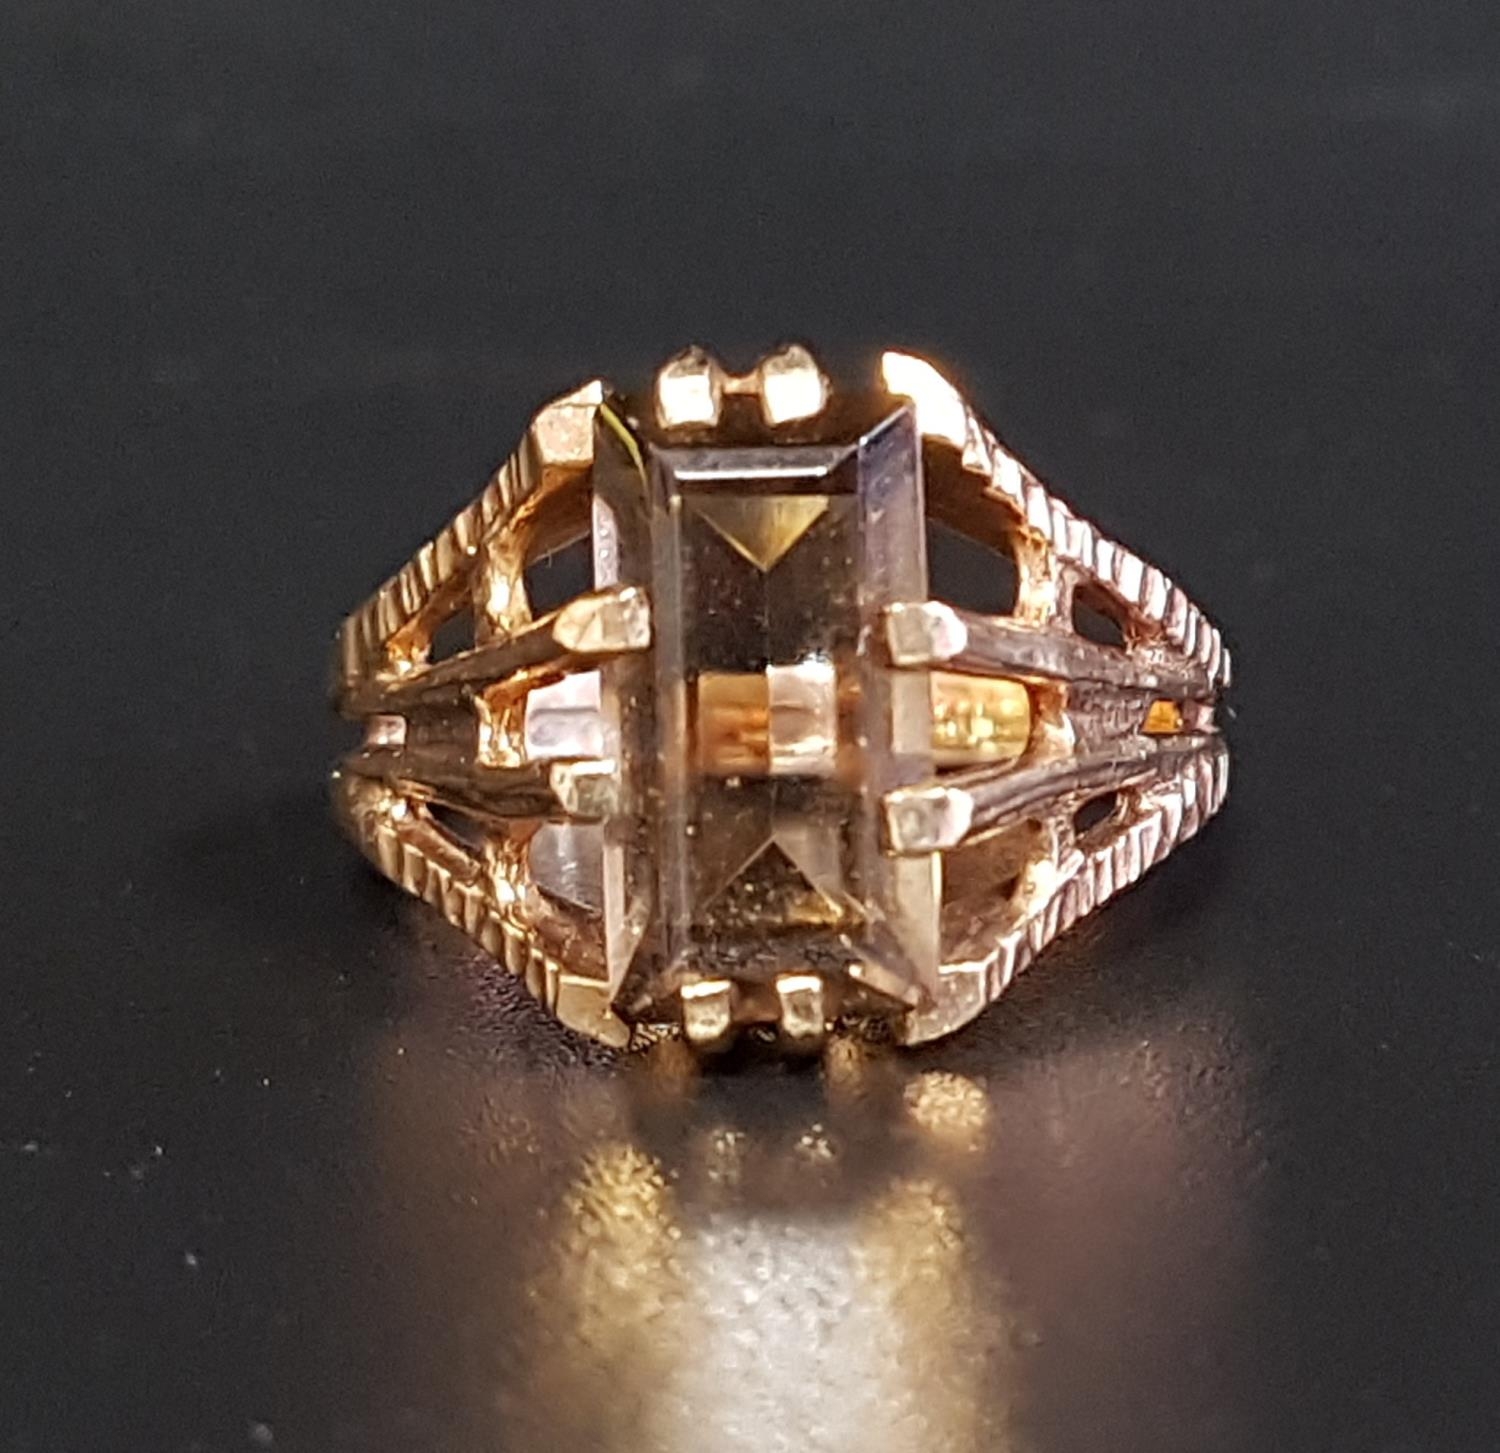 SMOKY QUARTZ SINGLE STONE RING the step cut quartz on nine carat gold shank, with textured and split